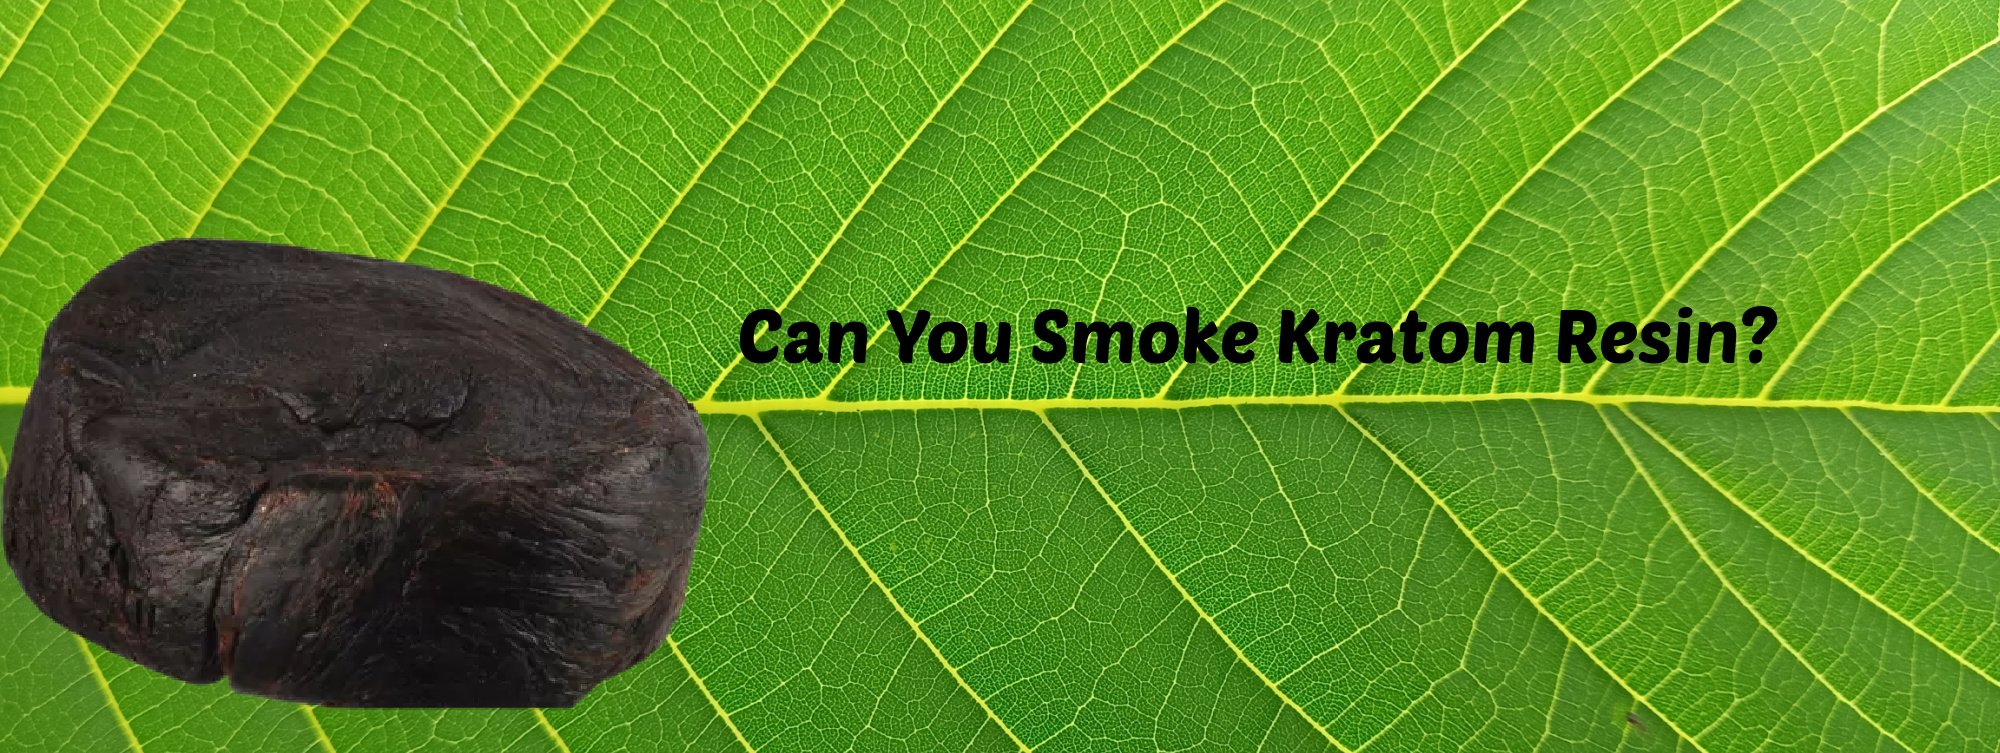 image of can you smoke kratom resin